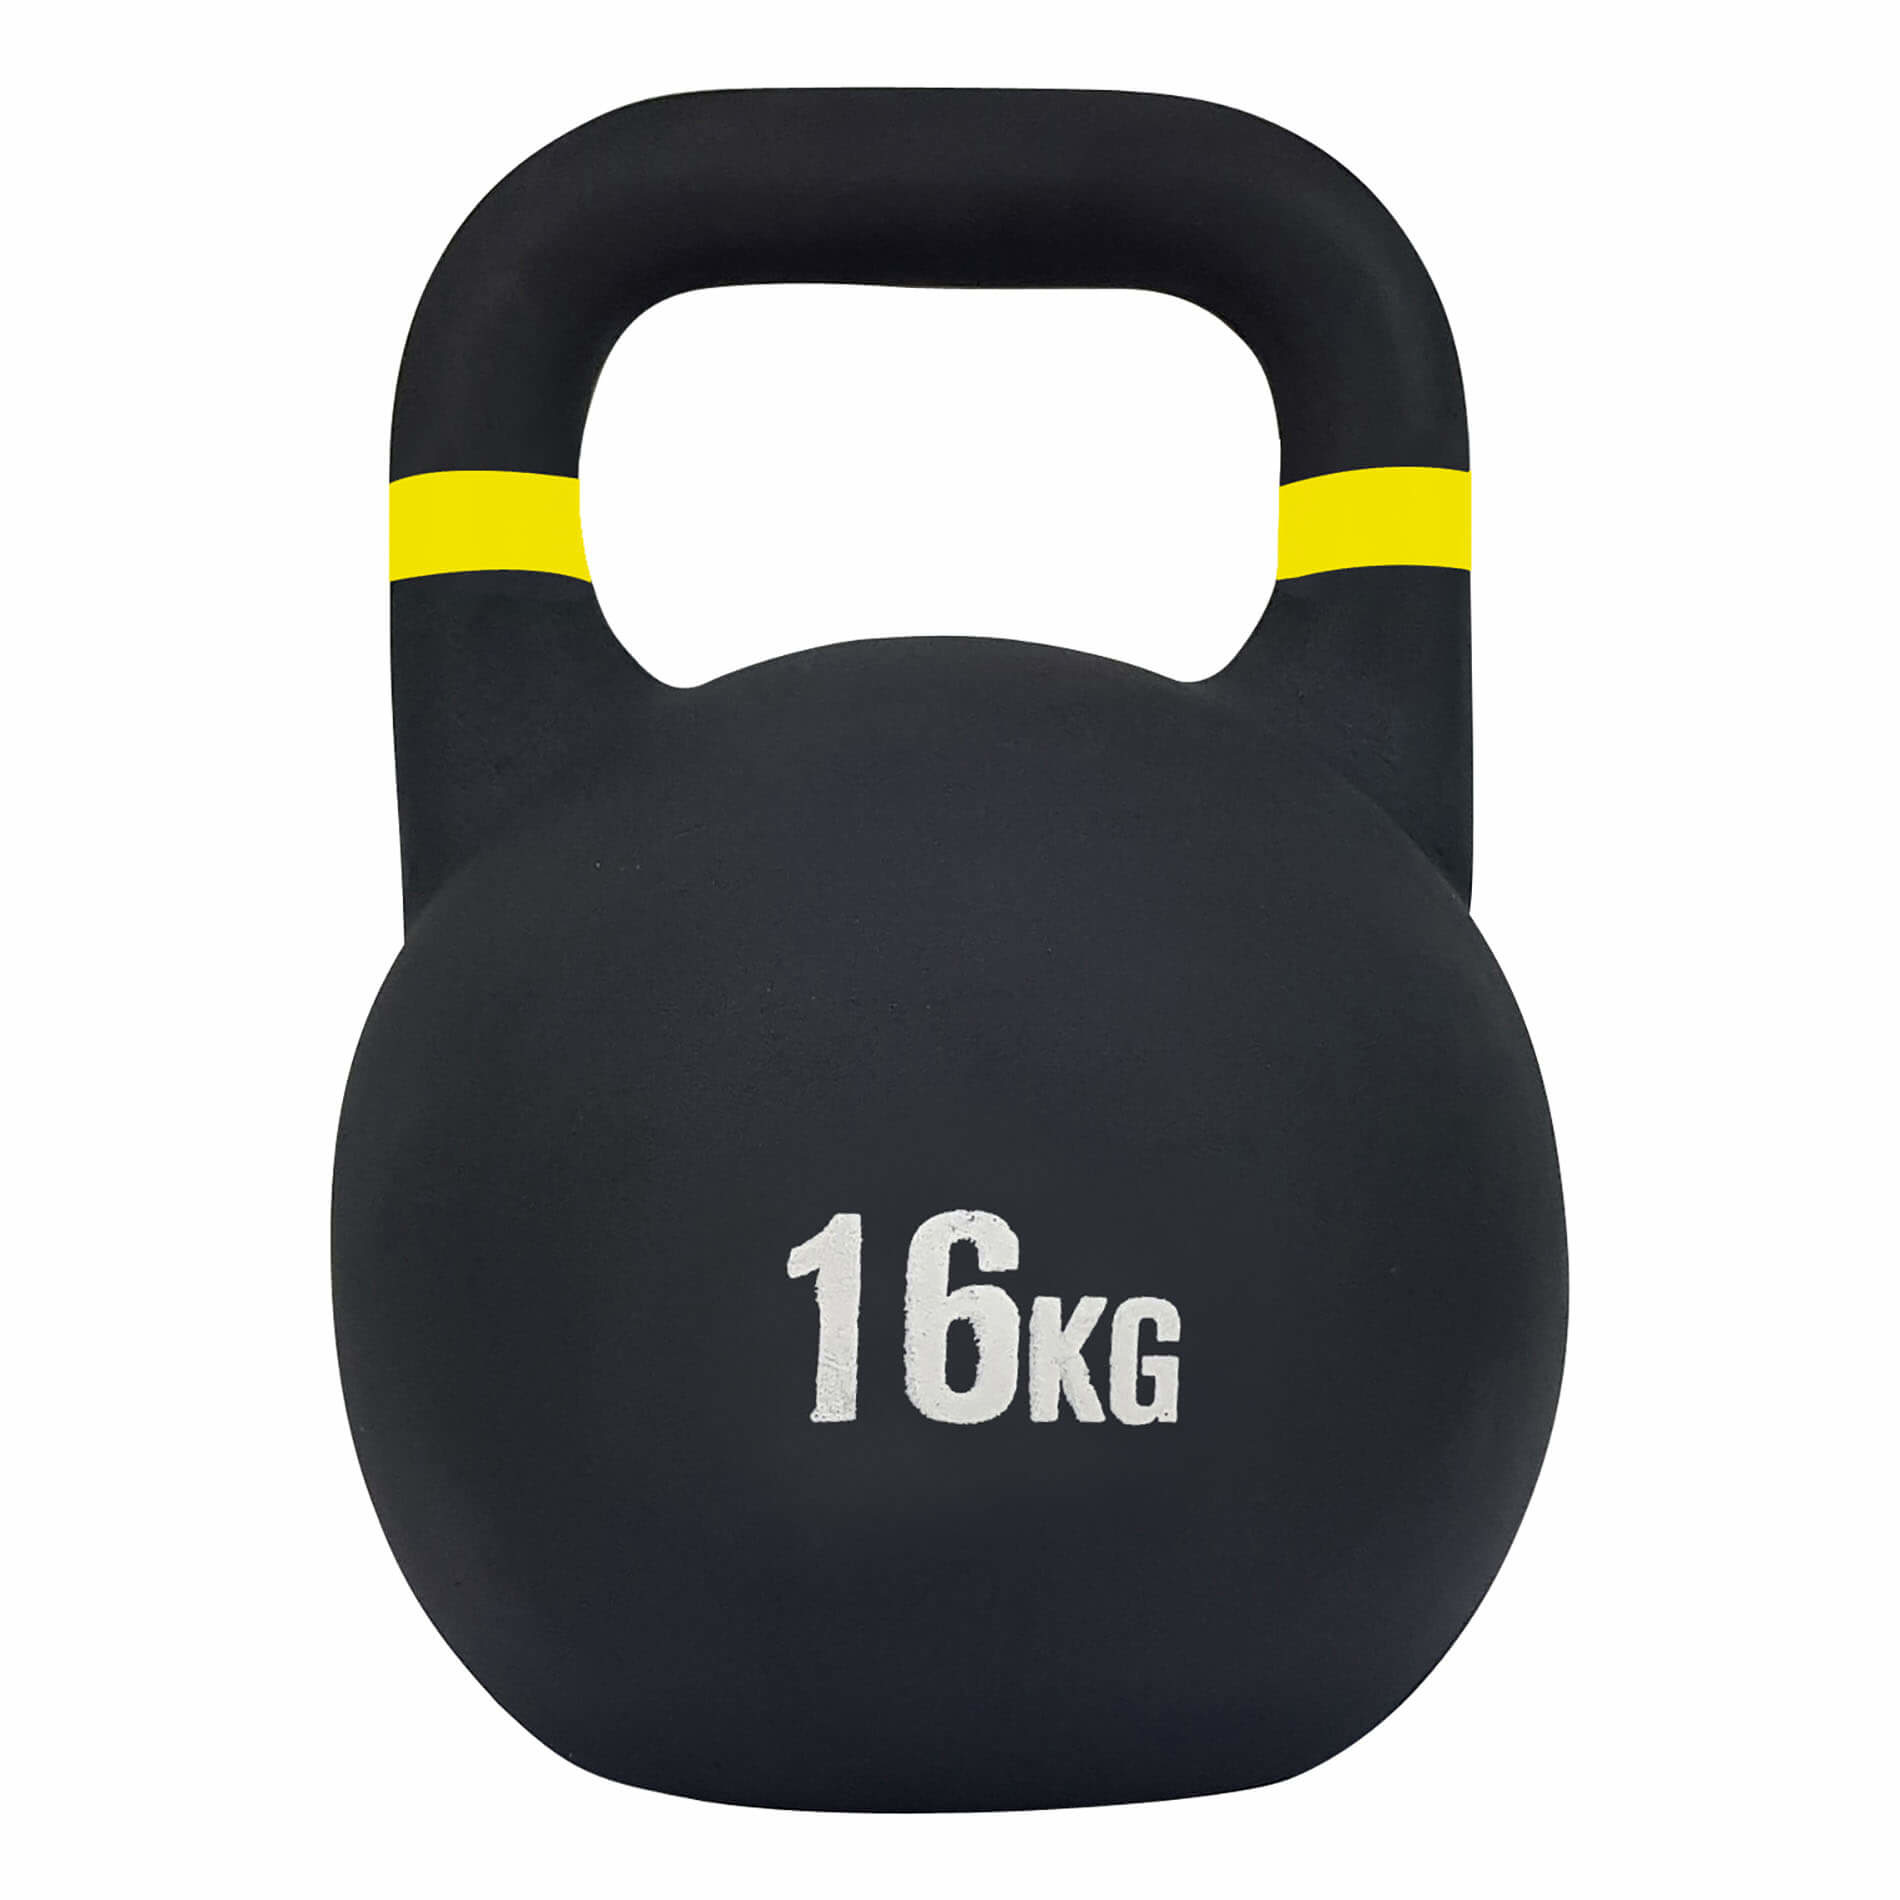 Competition Kettlebell, 16kg - Tunturi New Fitness B.V.